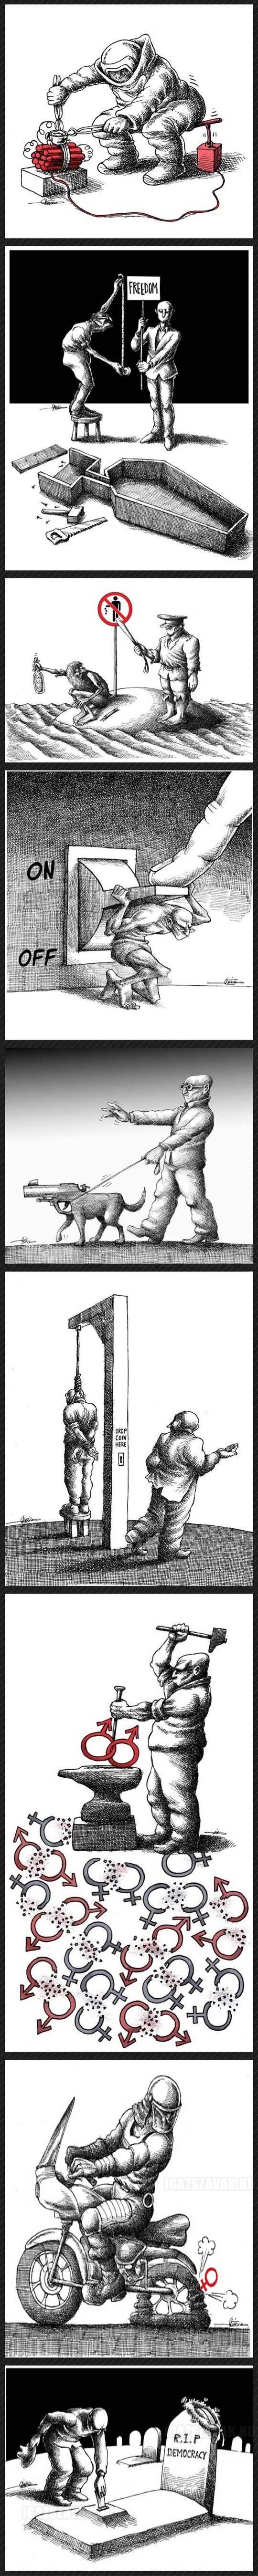 Mana Neyestani elgondolkodtató művei